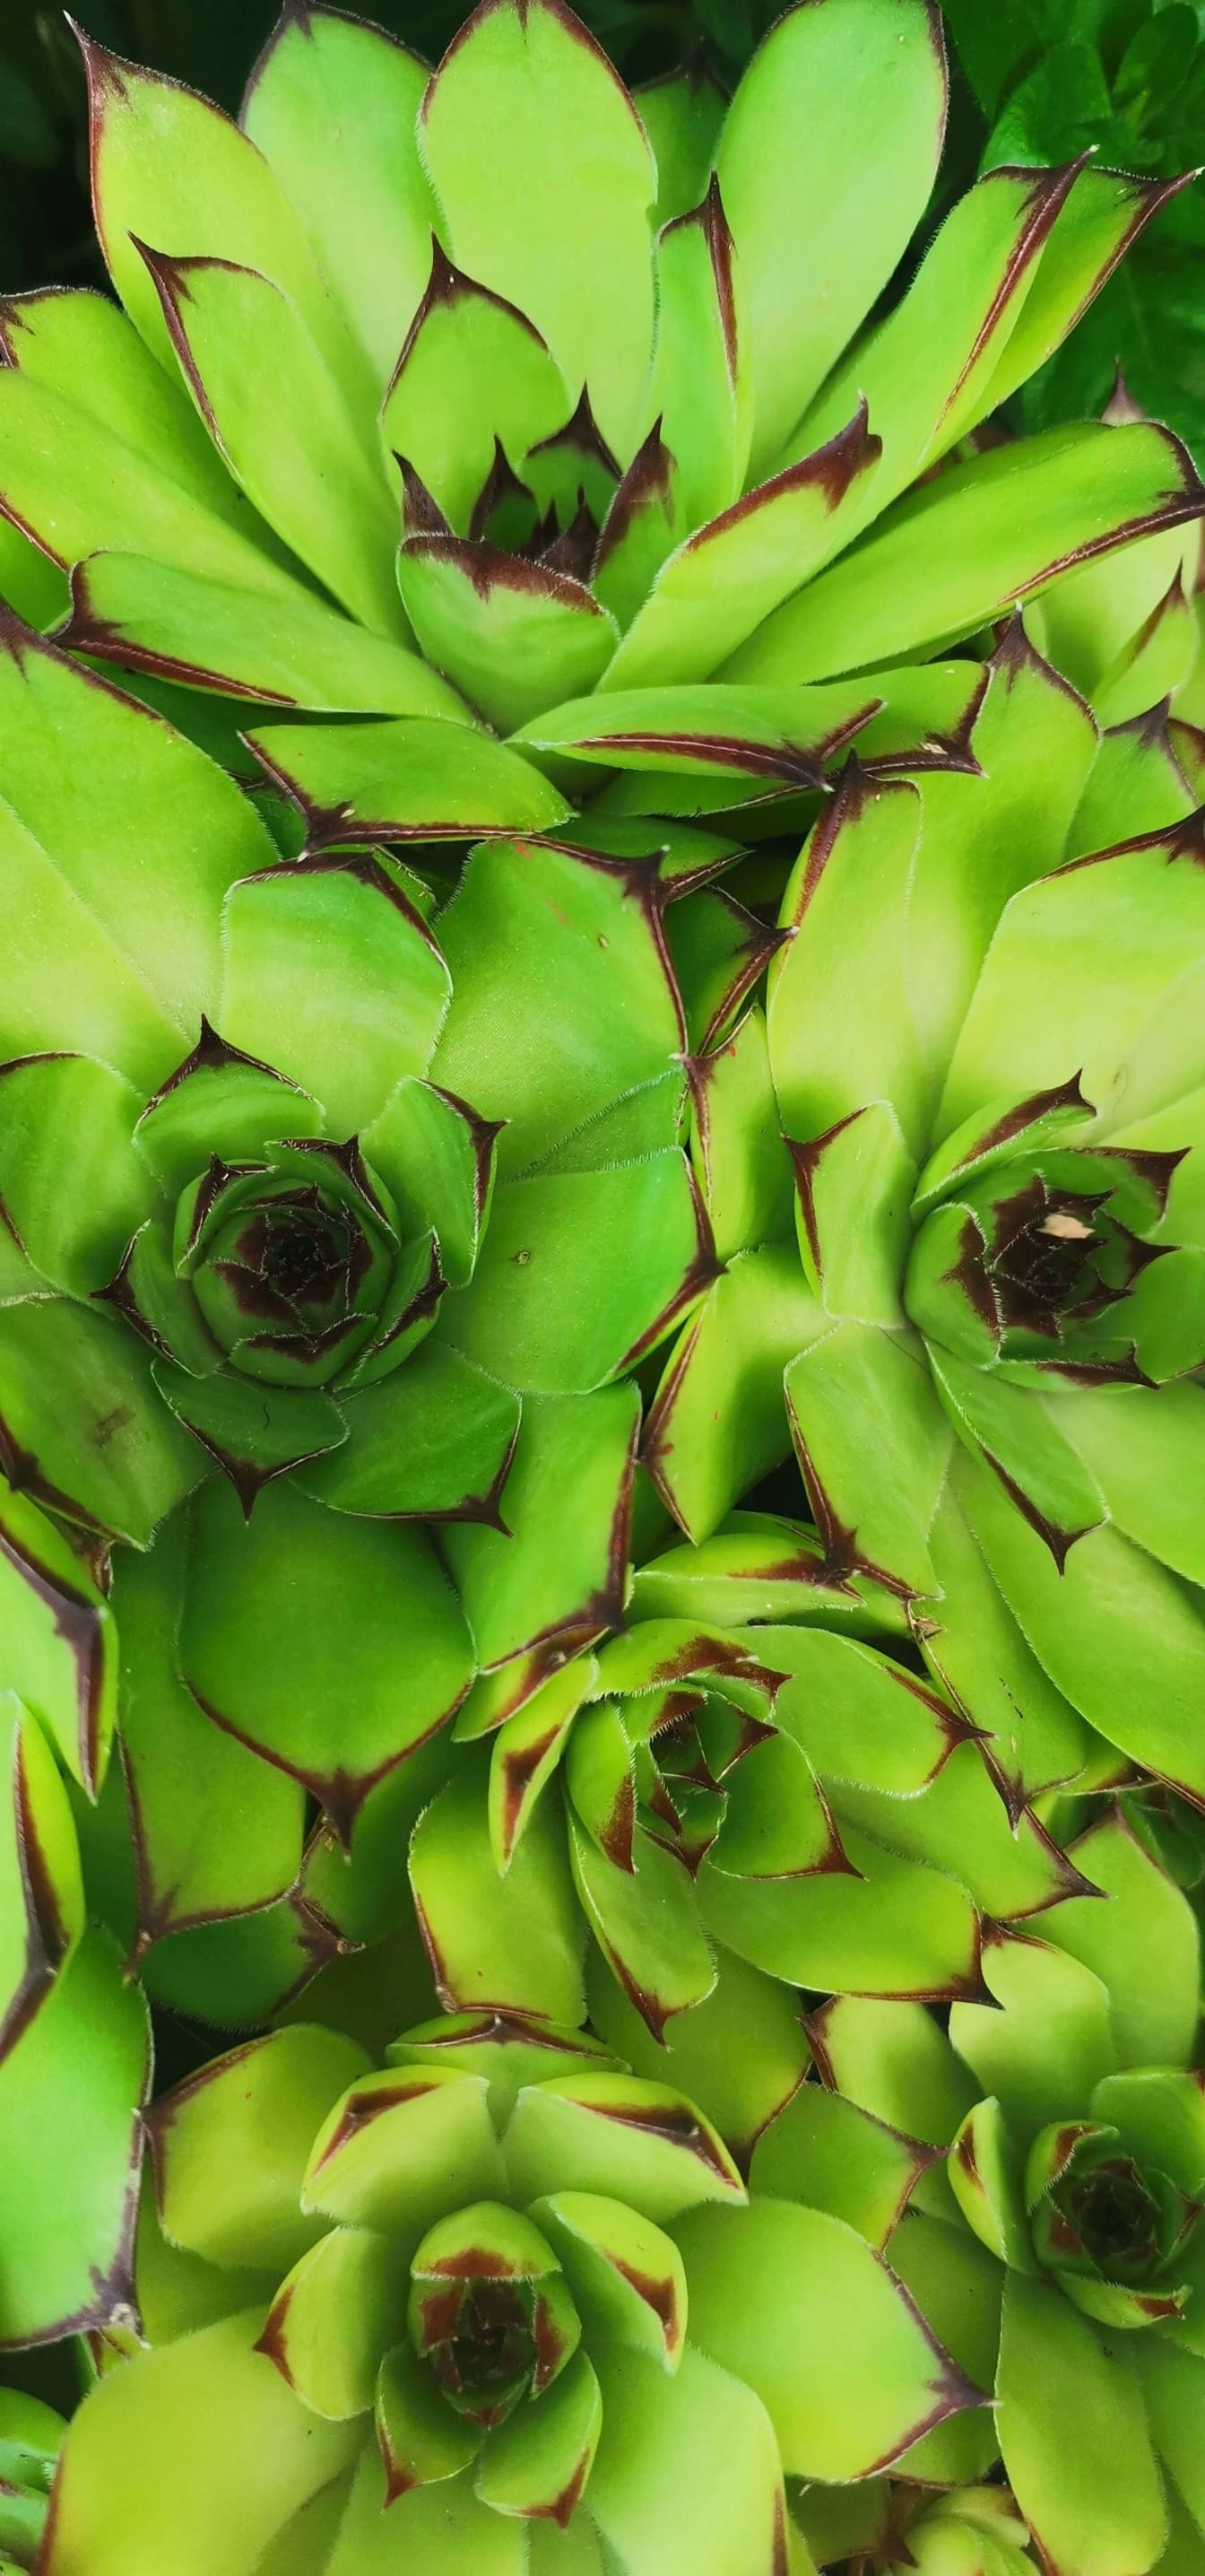 Greenich gule blade af hus porre (Sempervivum tectorum) urt nærbillede